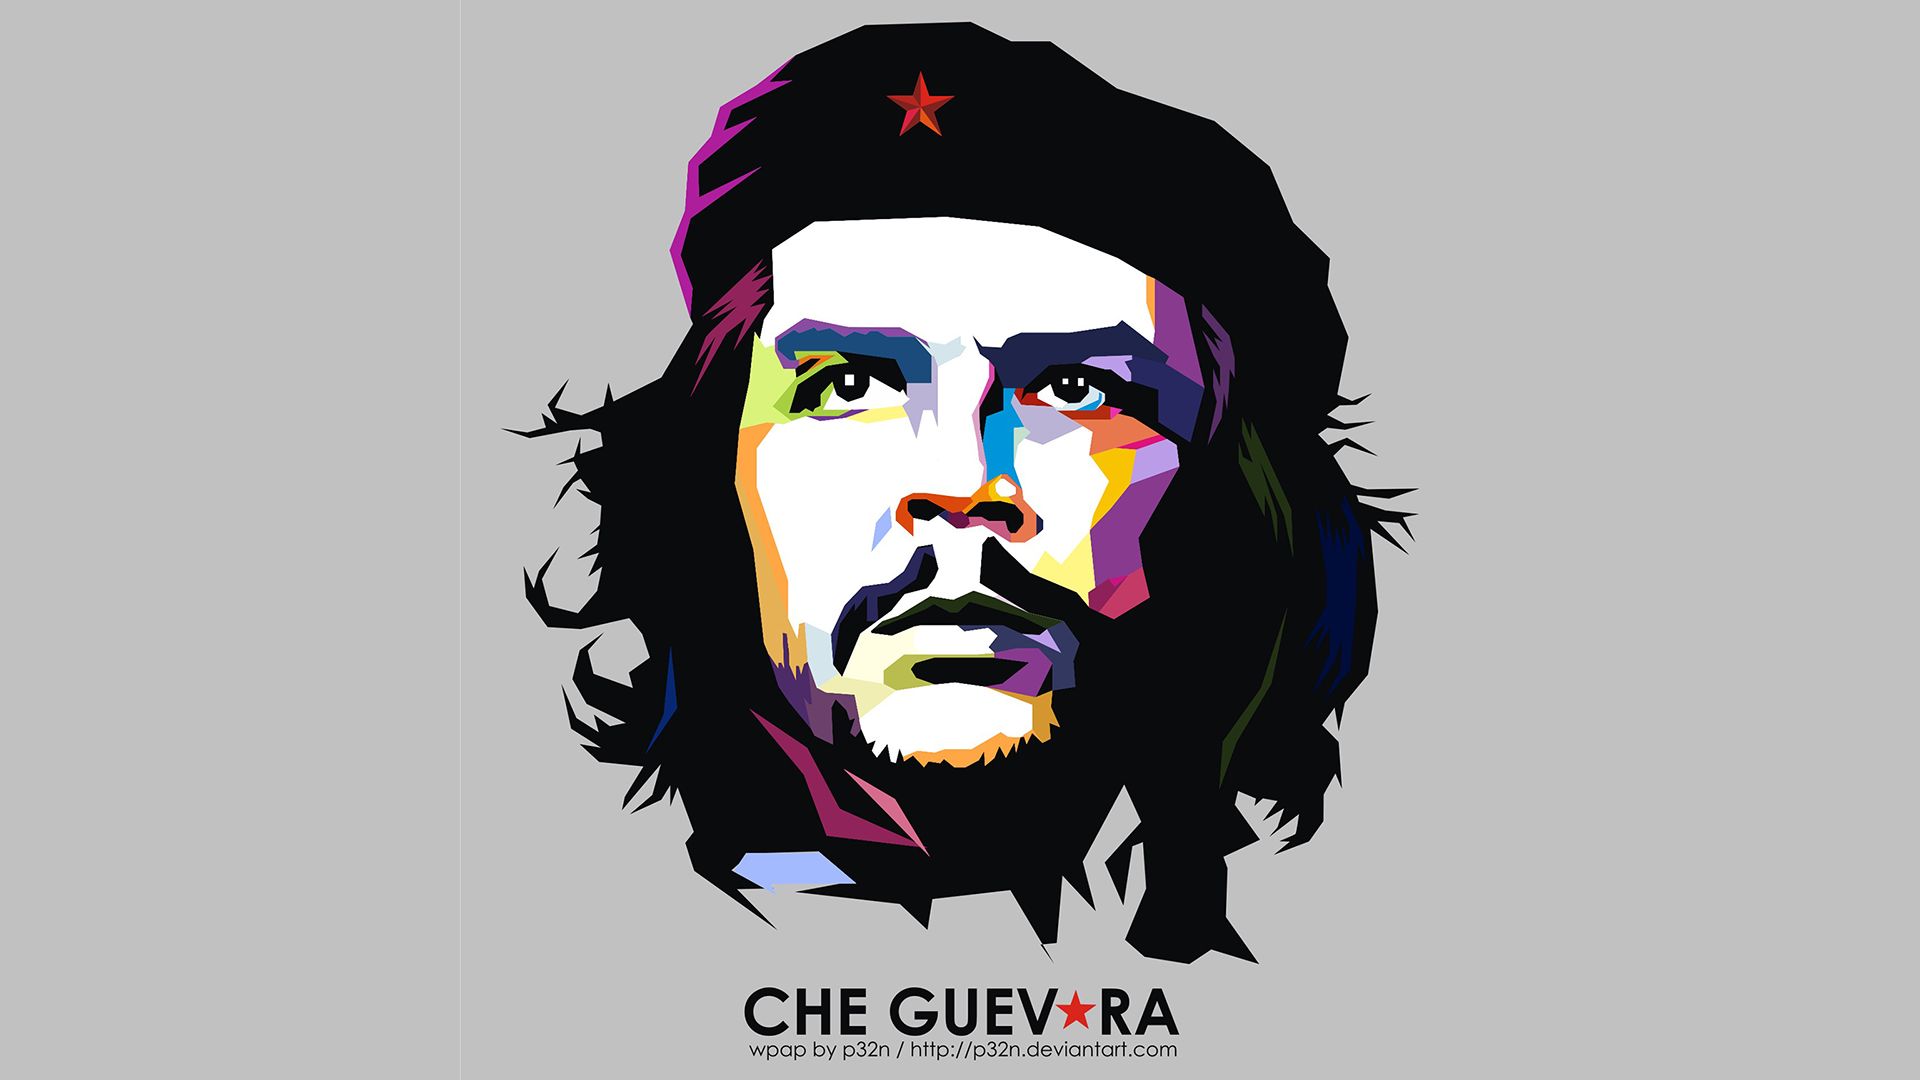 Che Guevara dark wallpaper  Che guevara art Che guevara photos Che  guevara images